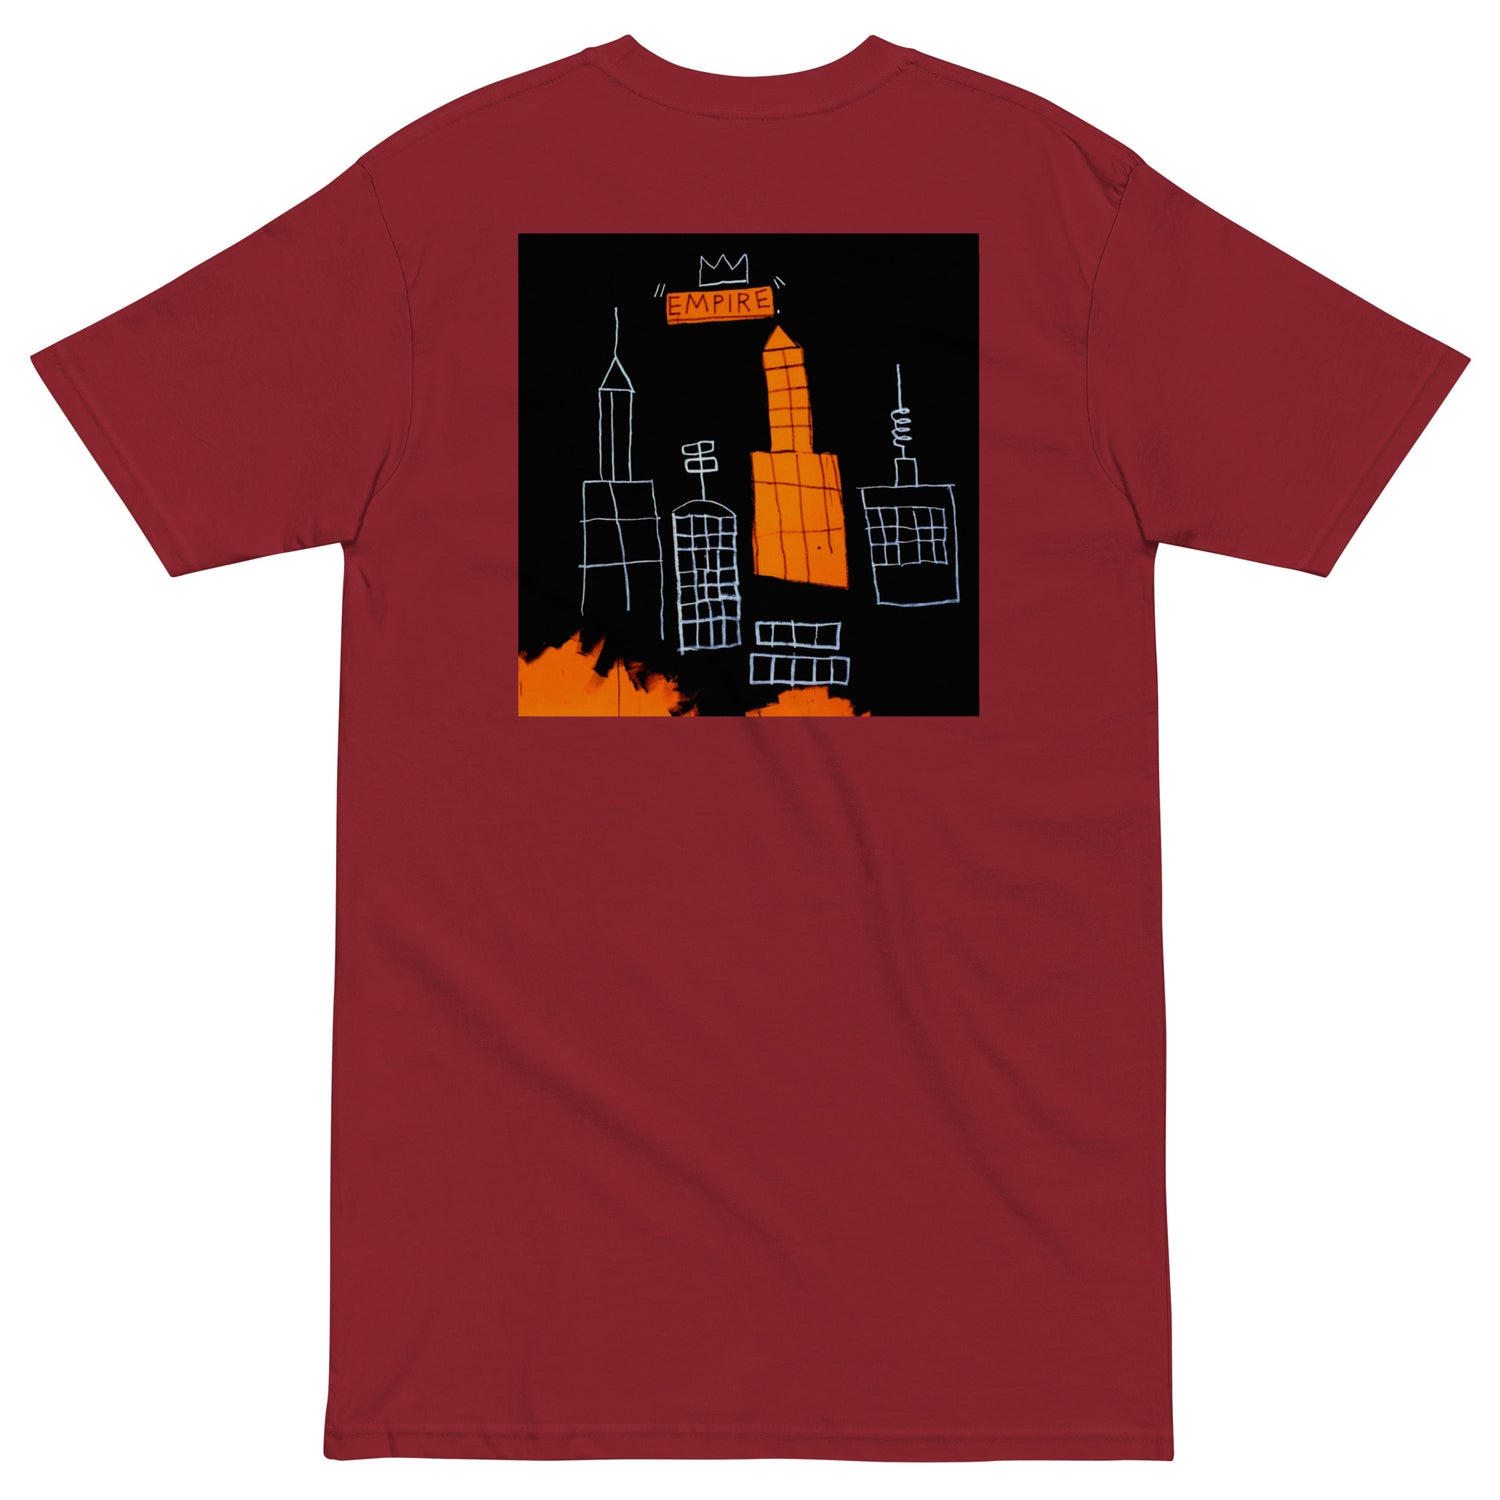 Jean-Michel Basquiat "Mecca" 1982 Artwork Embroidered + Printed Premium Streetwear T-shirt Red